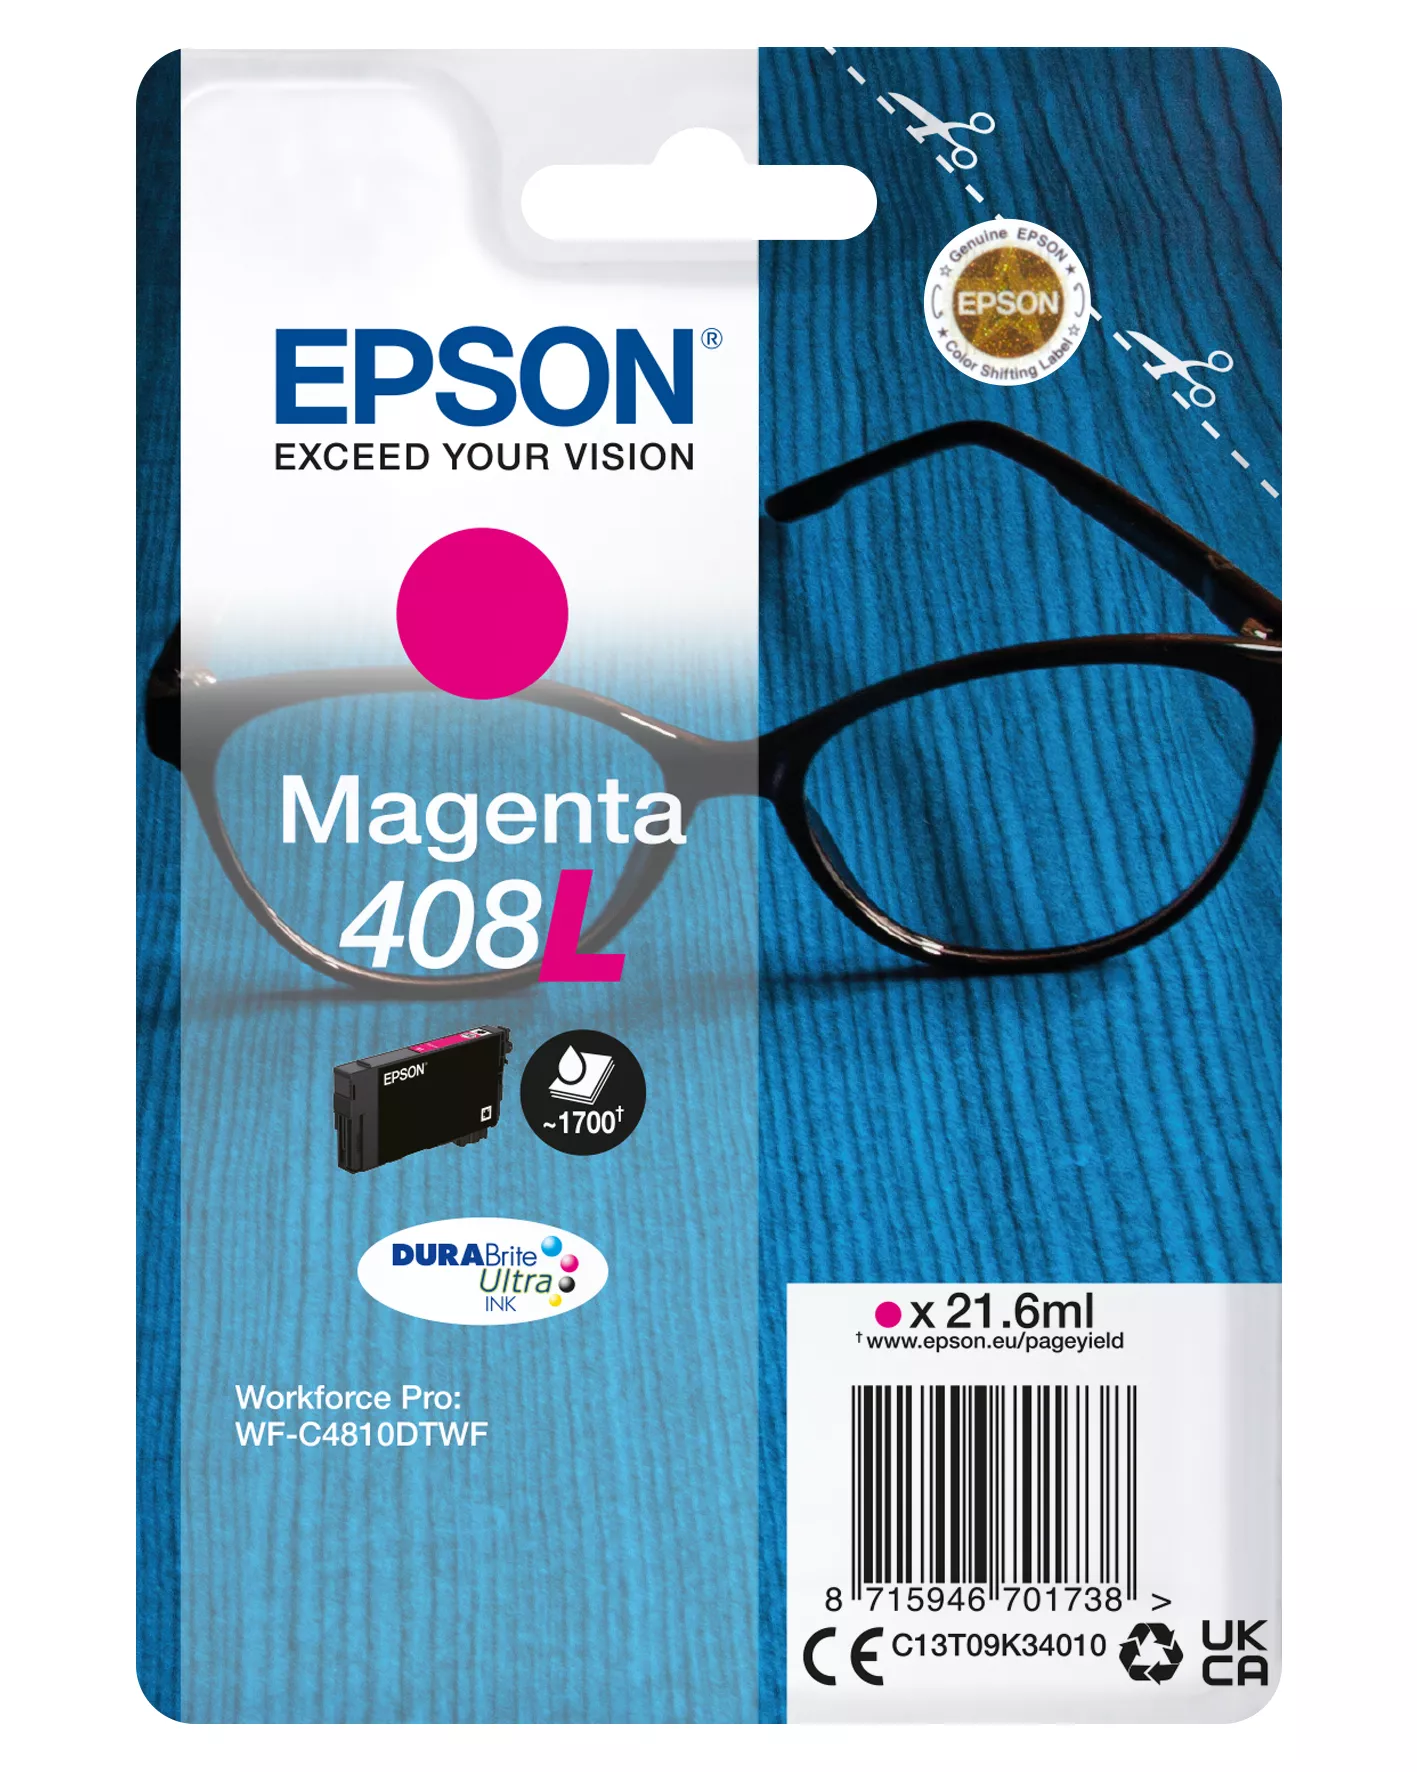 Achat EPSON Singlepack Magenta 408L DURABrite Ultra Ink au meilleur prix